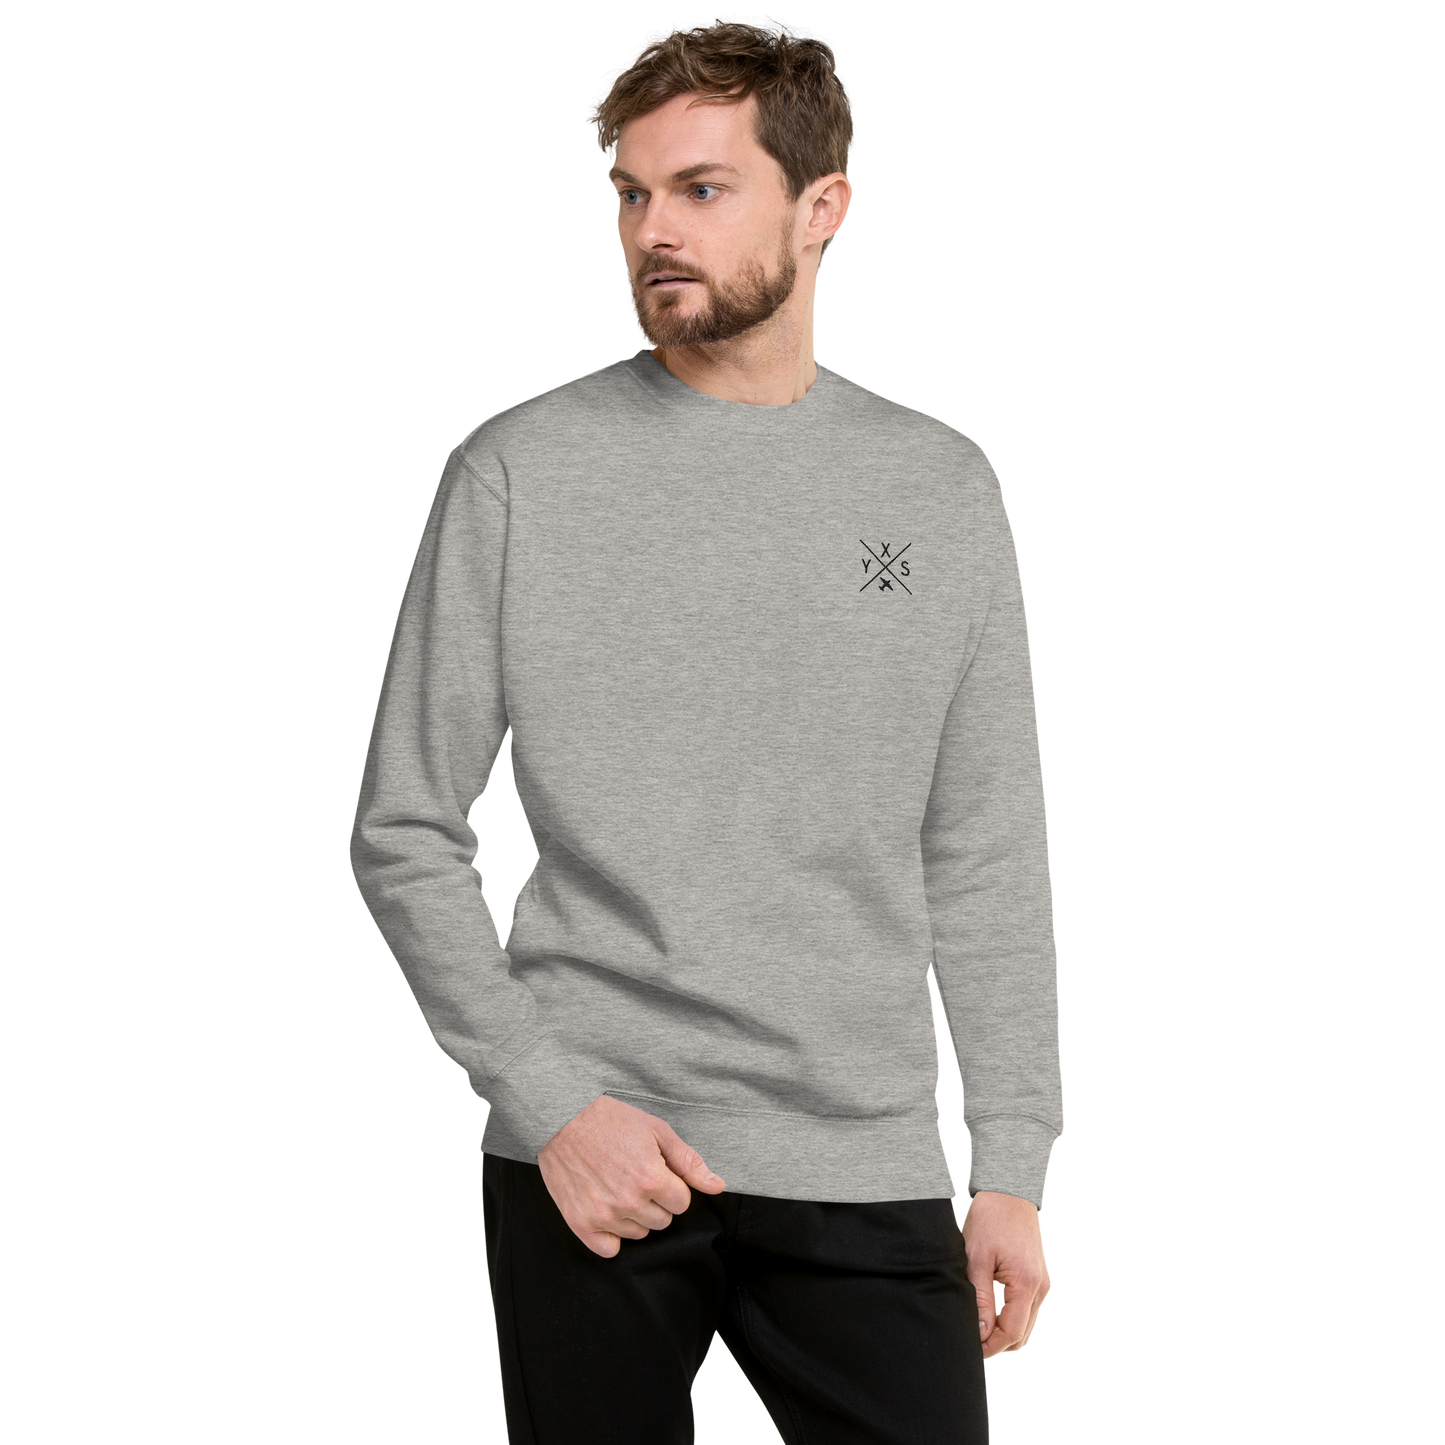 YHM Designs - YXS Prince George Premium Sweatshirt - Crossed-X Design with Airport Code and Vintage Propliner - Black Embroidery - Image 01